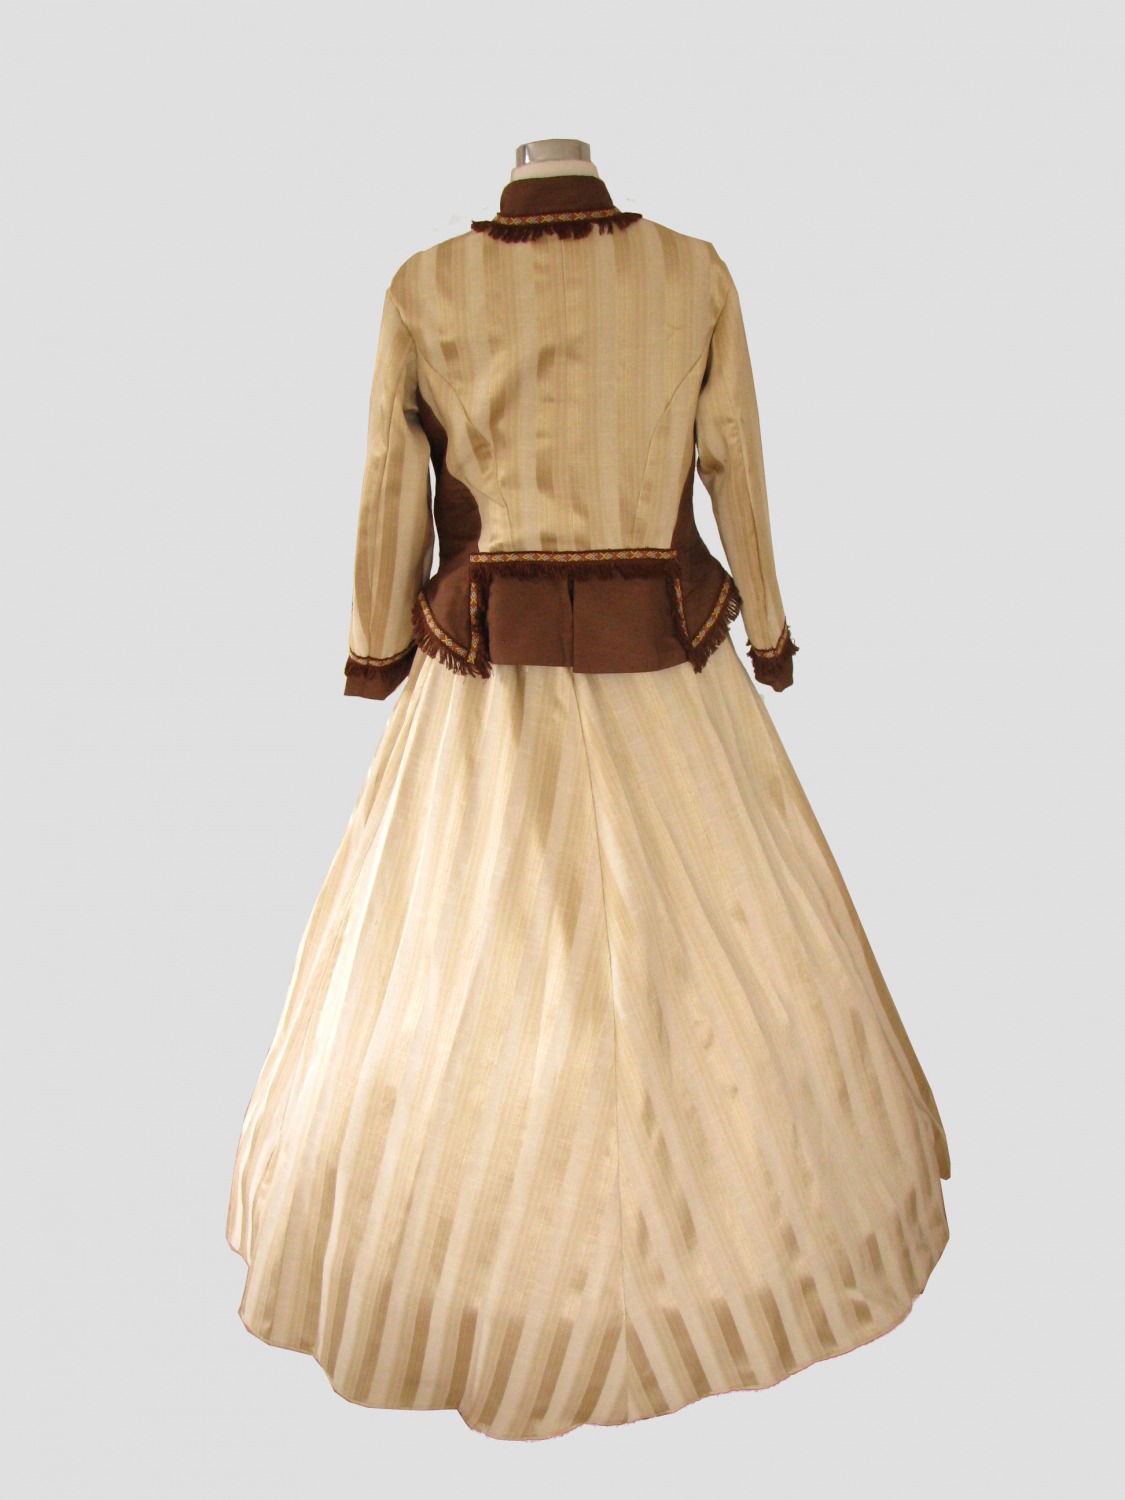 Ladies Victorian Edwardian Costume Size 14 - 16 Image